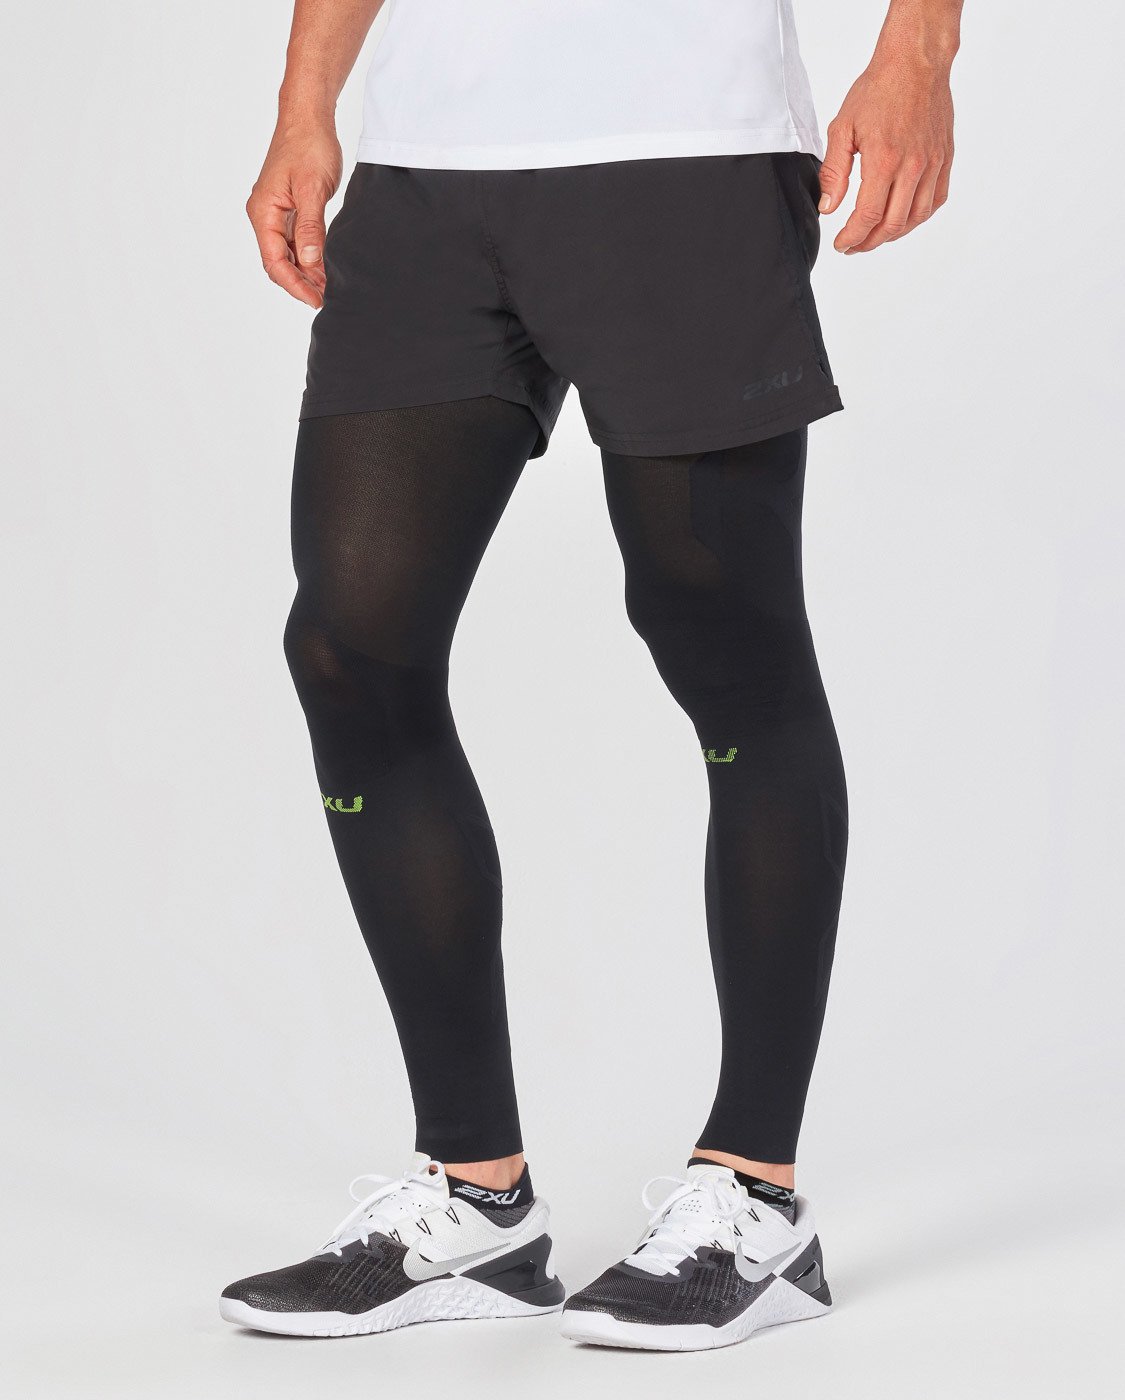 Nike Zoned Support Calf Sleeves, Medium